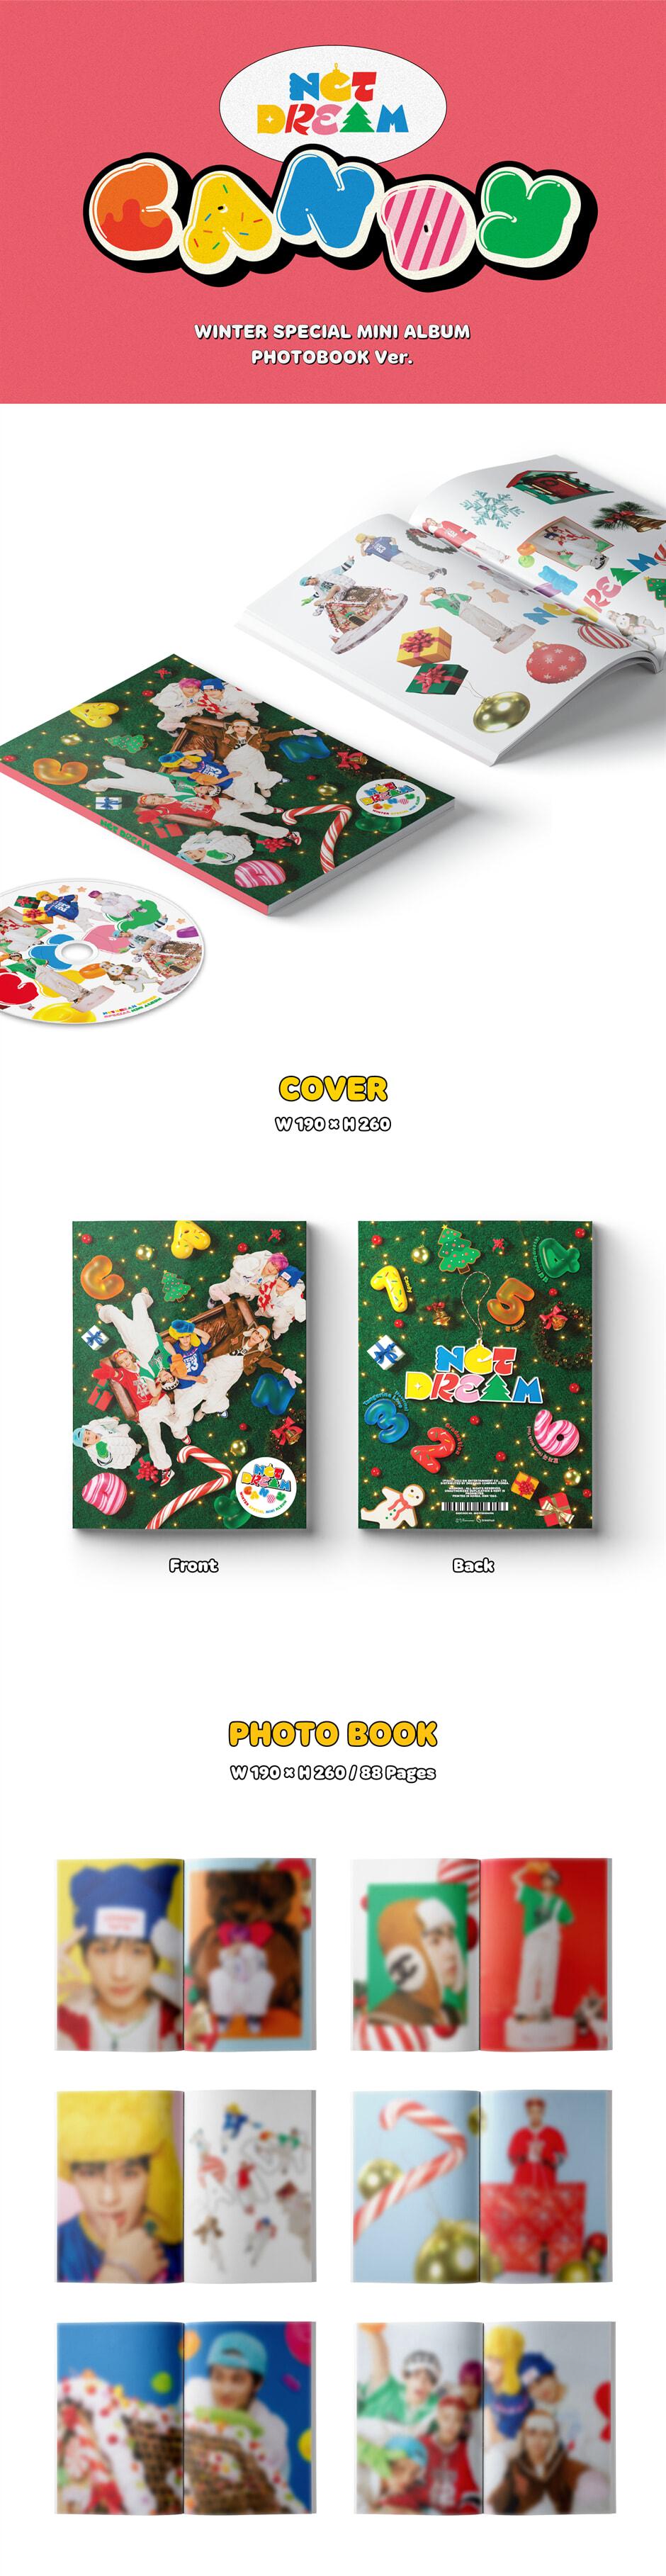 K-Pop CD NCT Dream - Winter Special Mini Album 'Candy' [Photobook Ver.]